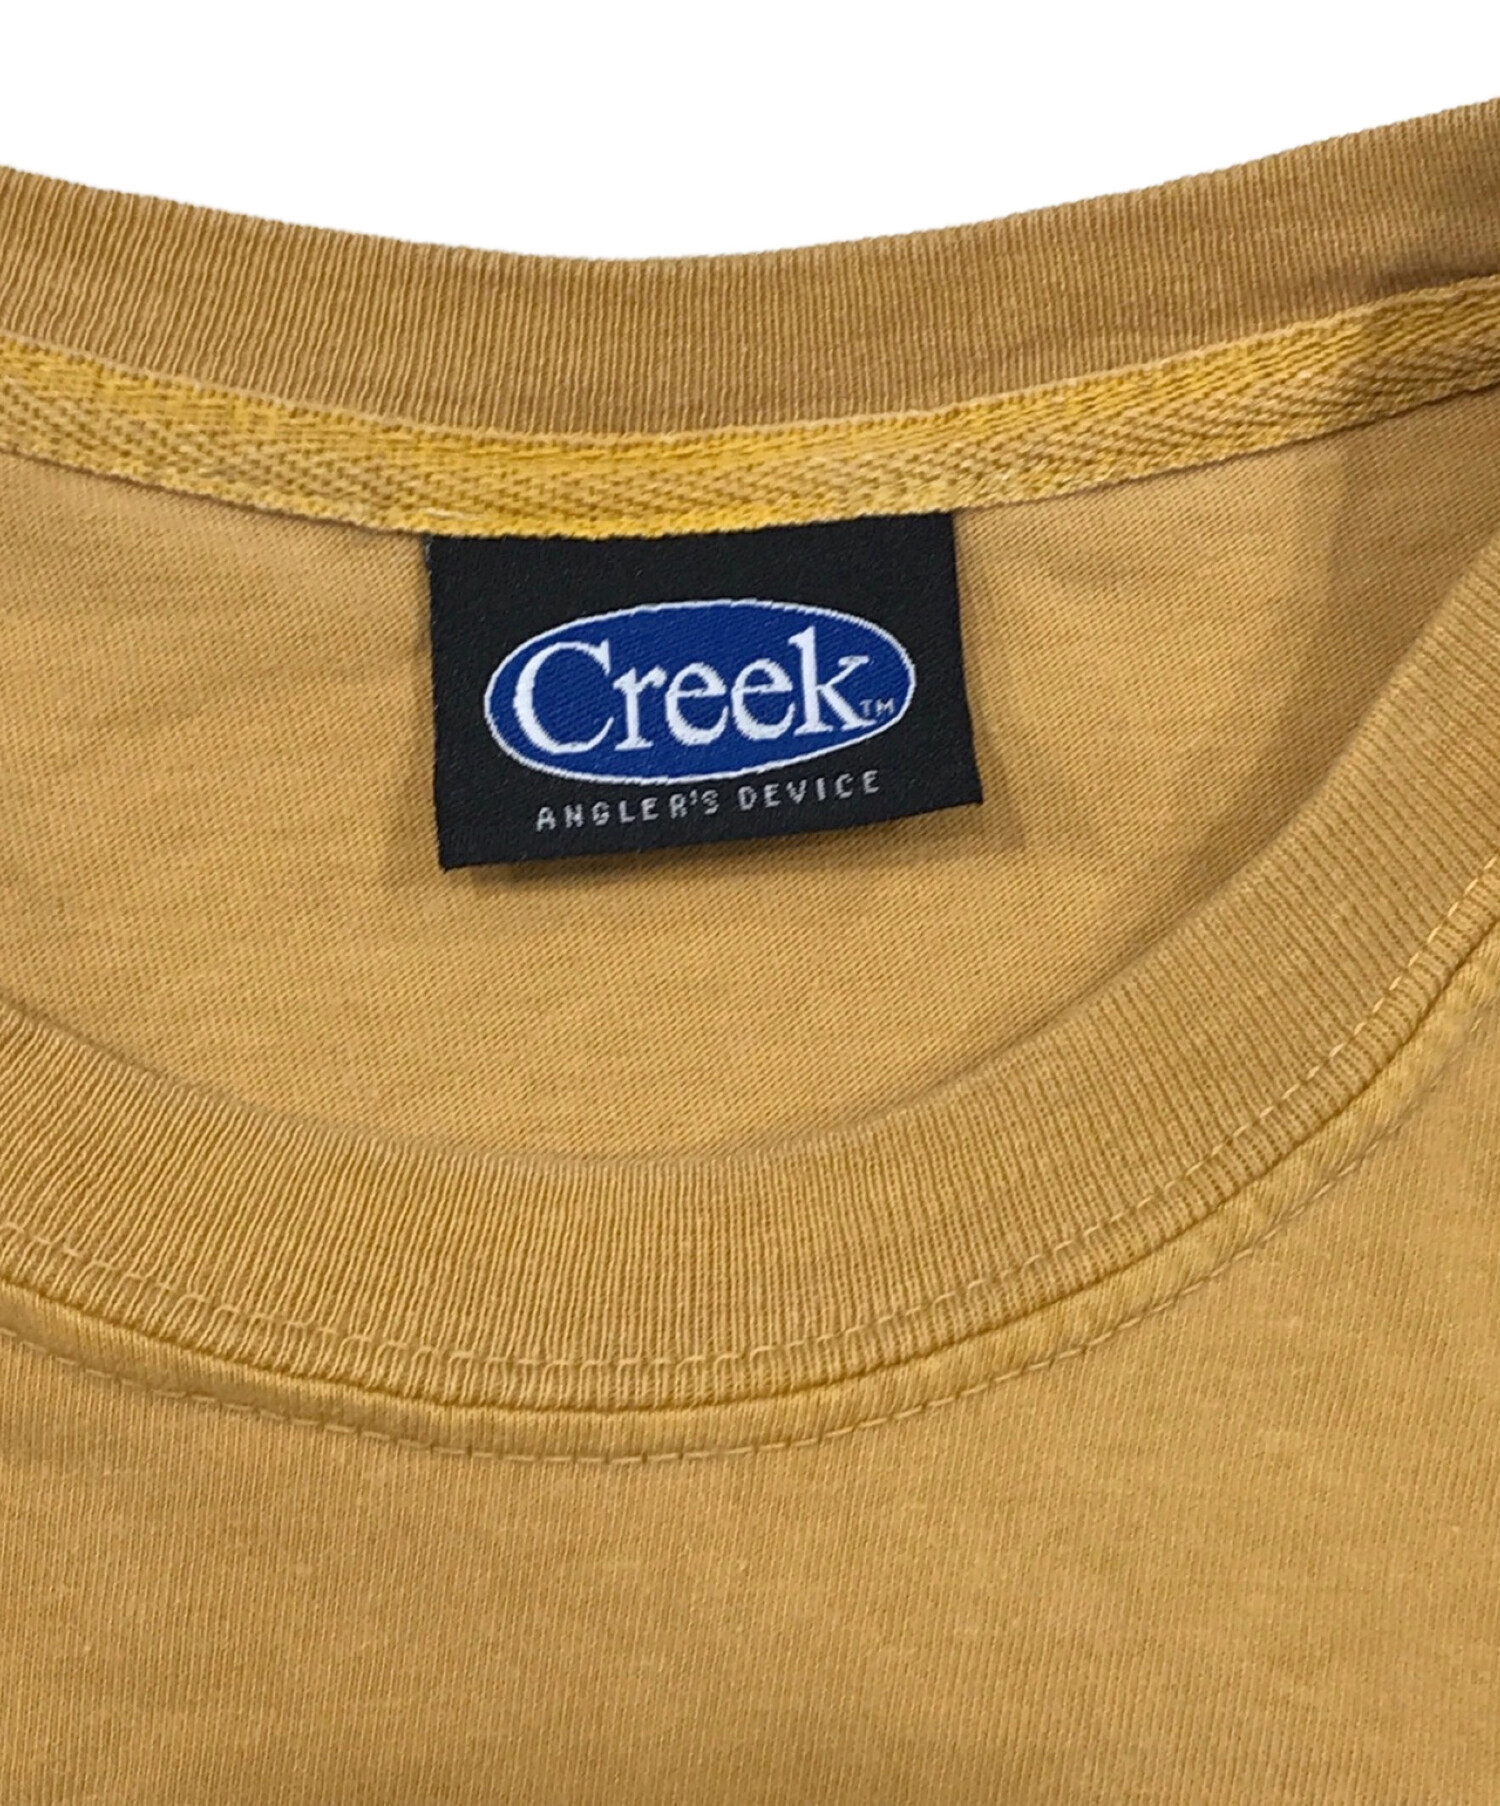 Creek Angler's Device (クリークアングラーズデヴァイス) プリントTシャツ イエロー サイズ:SIZE XXL